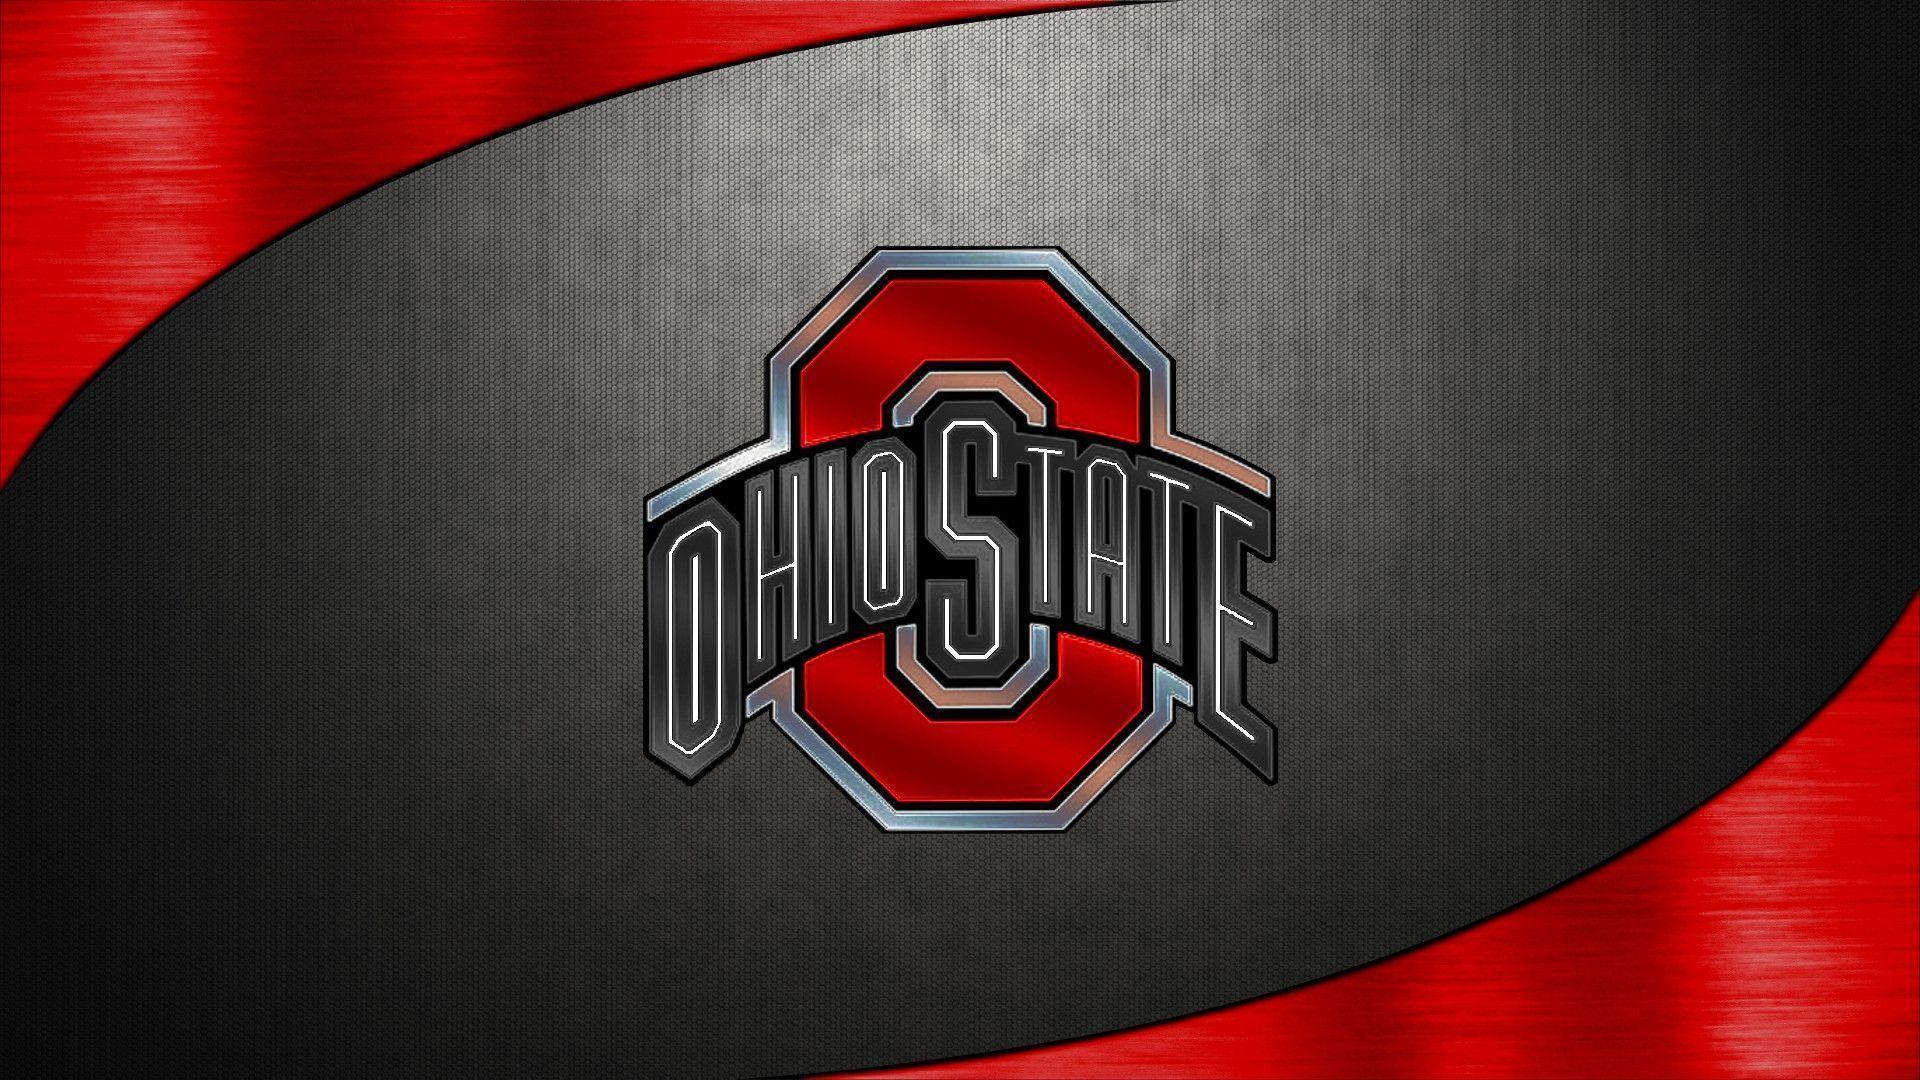 Ohio State Football Logo 22, Photo, Image in High